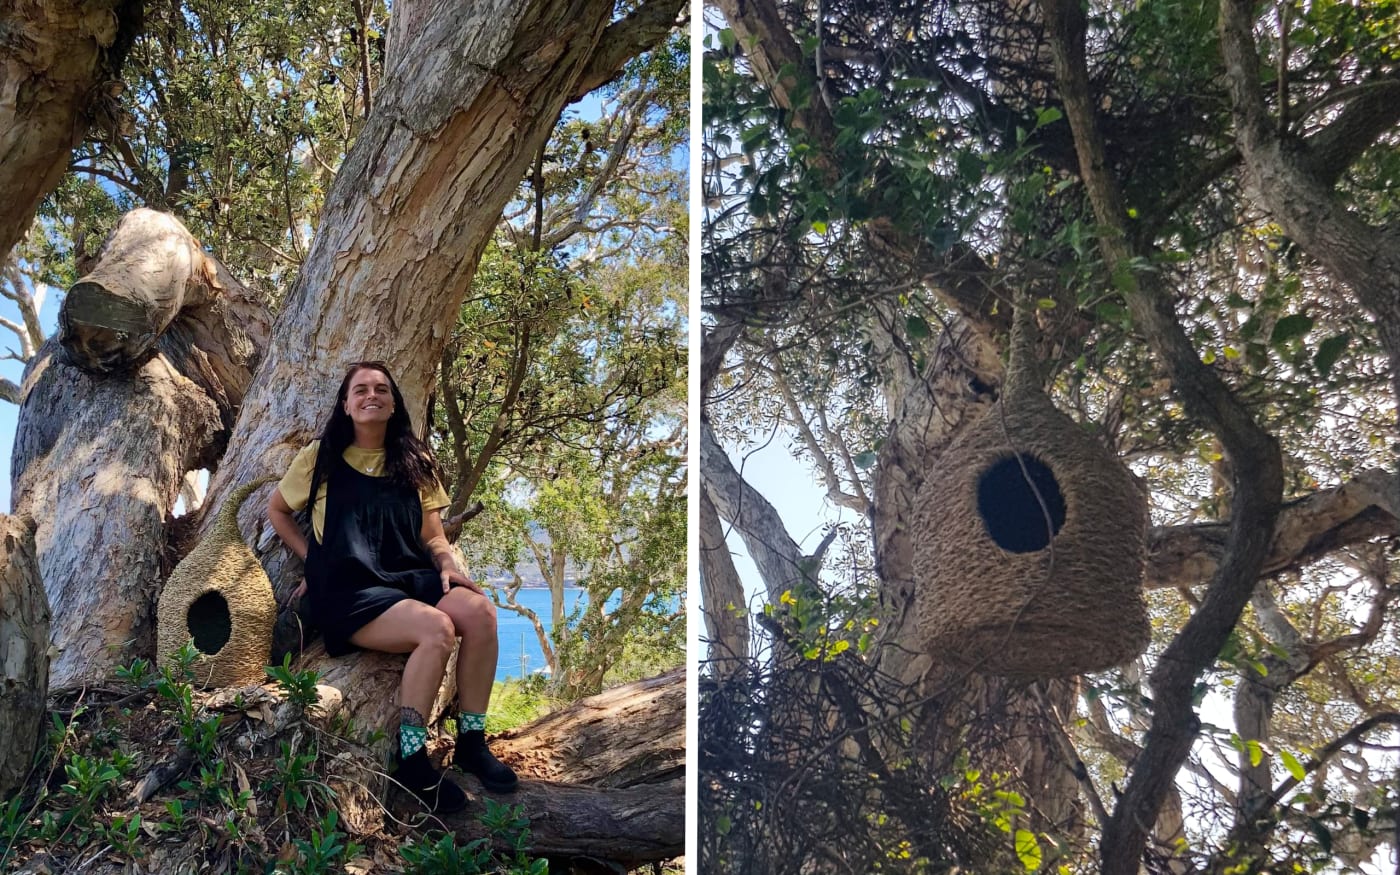 Rosie Goslett King, WWF-Australia’s Women Rangers Environmental Network Coordinator and Yuin artist with her nest weaving sculptures on Garangal Country